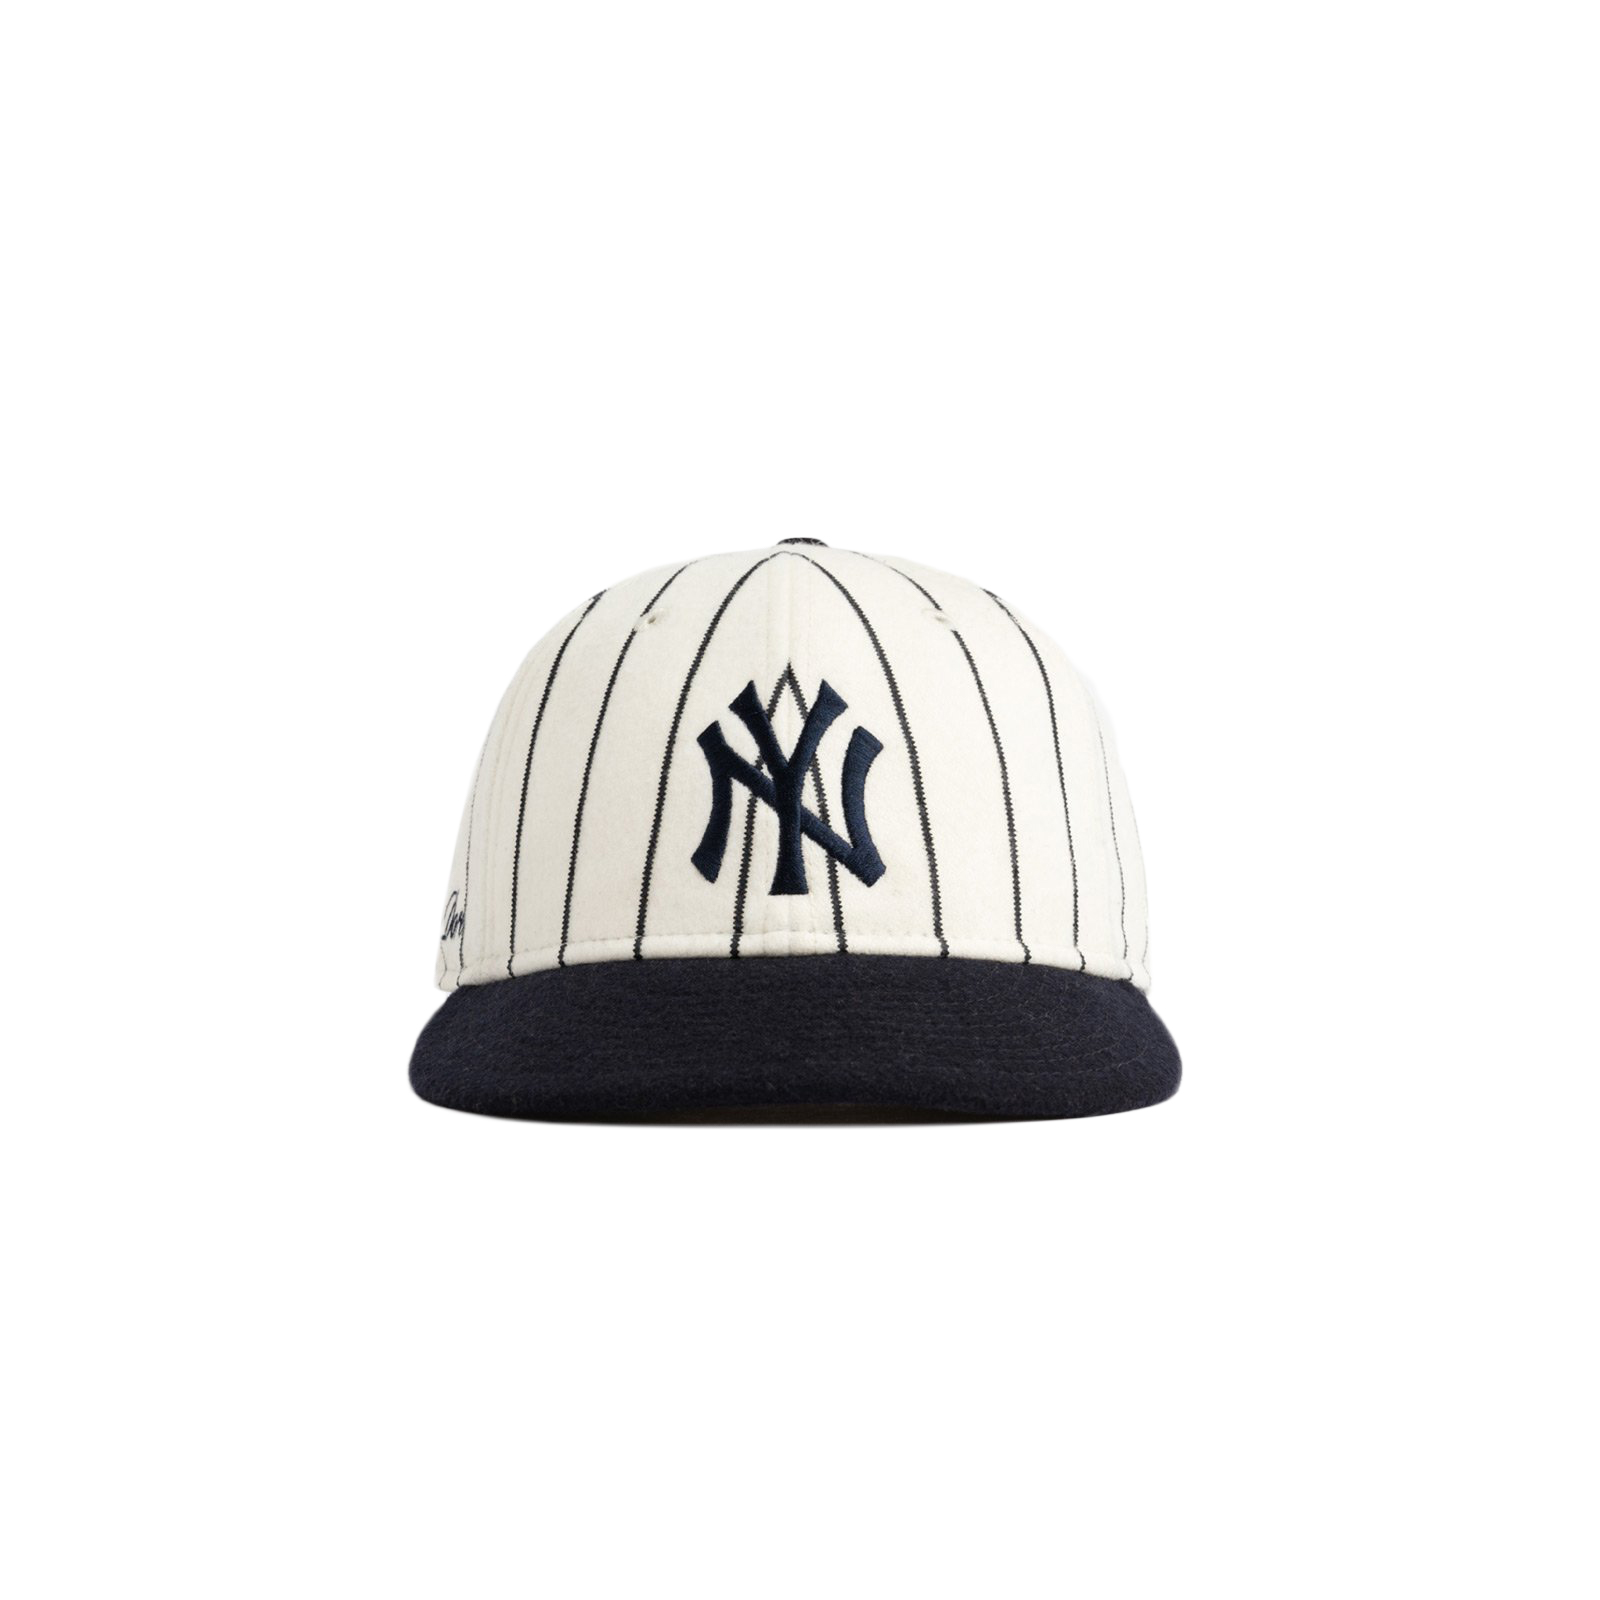 Aime Leon Dore New Era Yankees Hat 7 1/8 www.krzysztofbialy.com